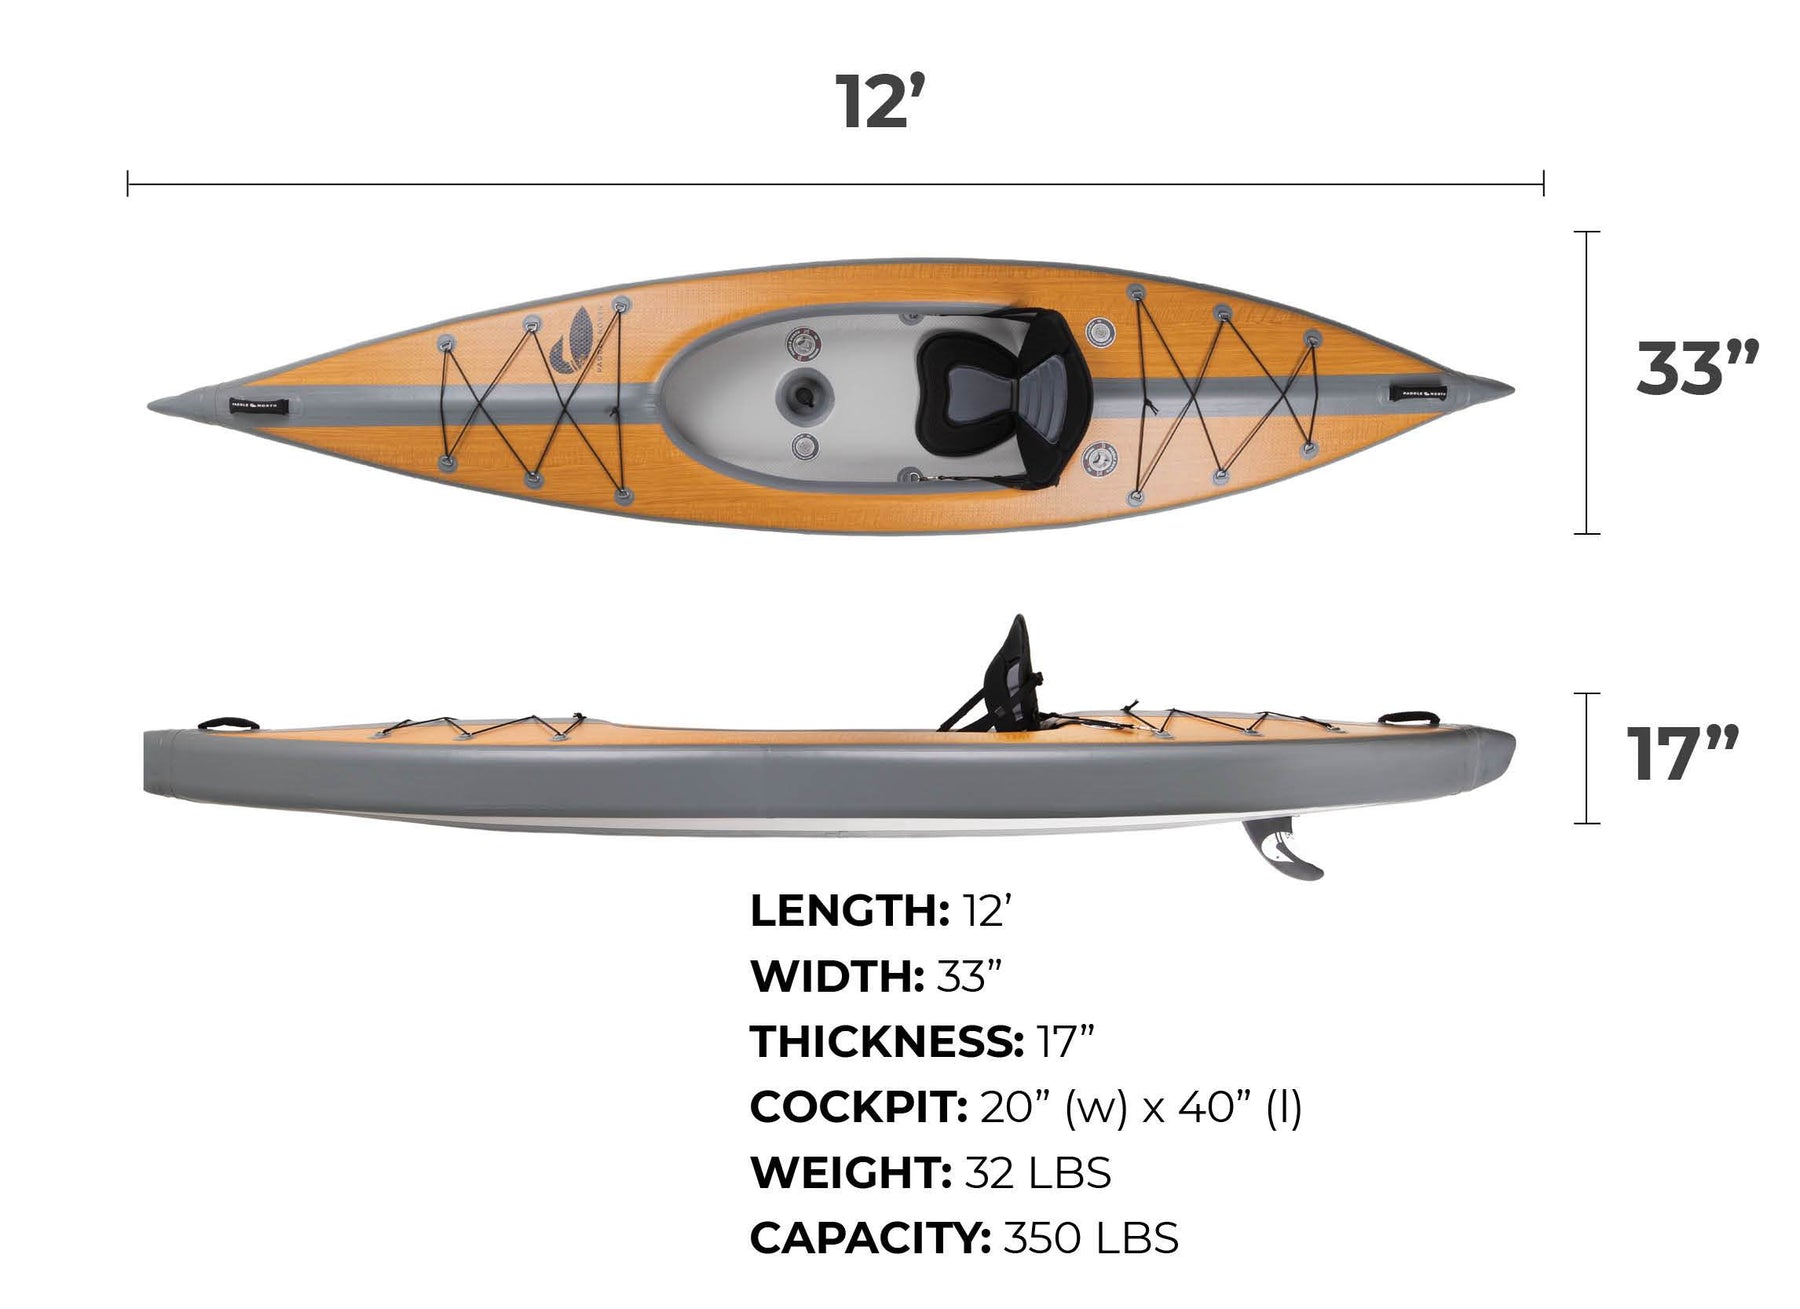 Paddle North Karve Kayak XL